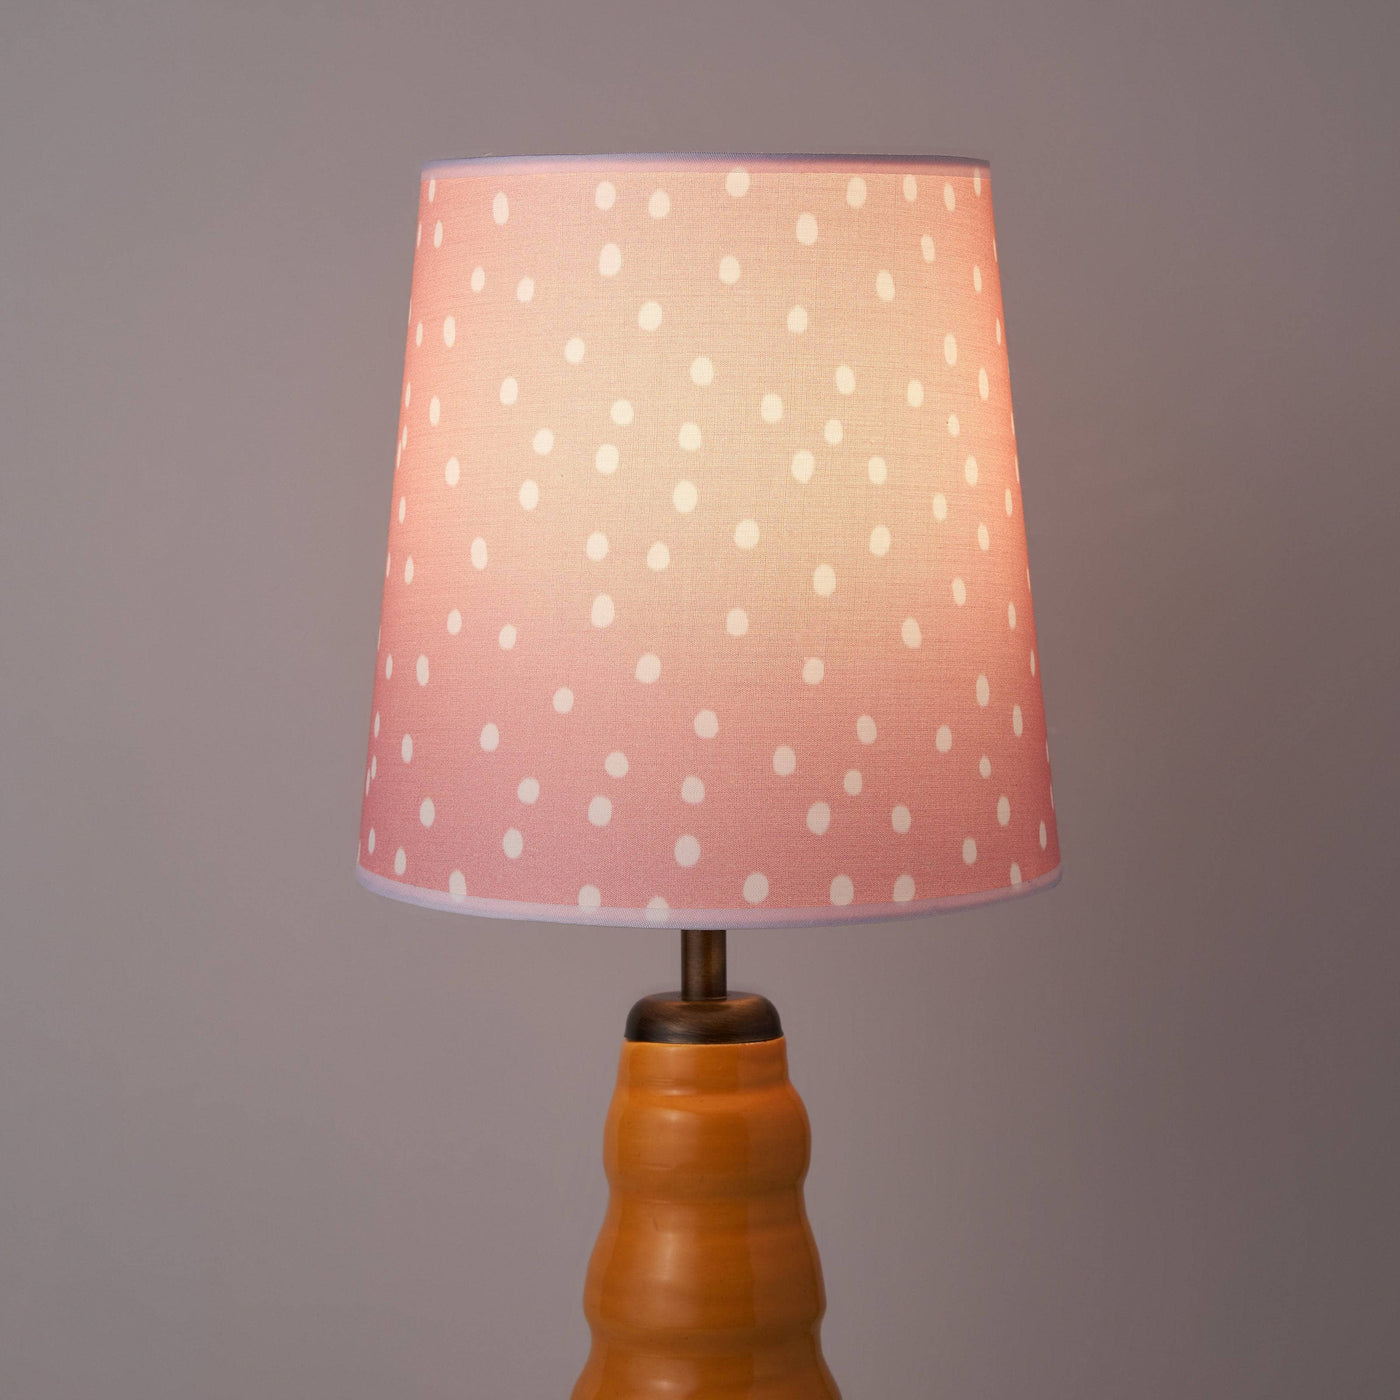 Bird Bedside Lamp Shade, Pink Kids Lighting sazy.com